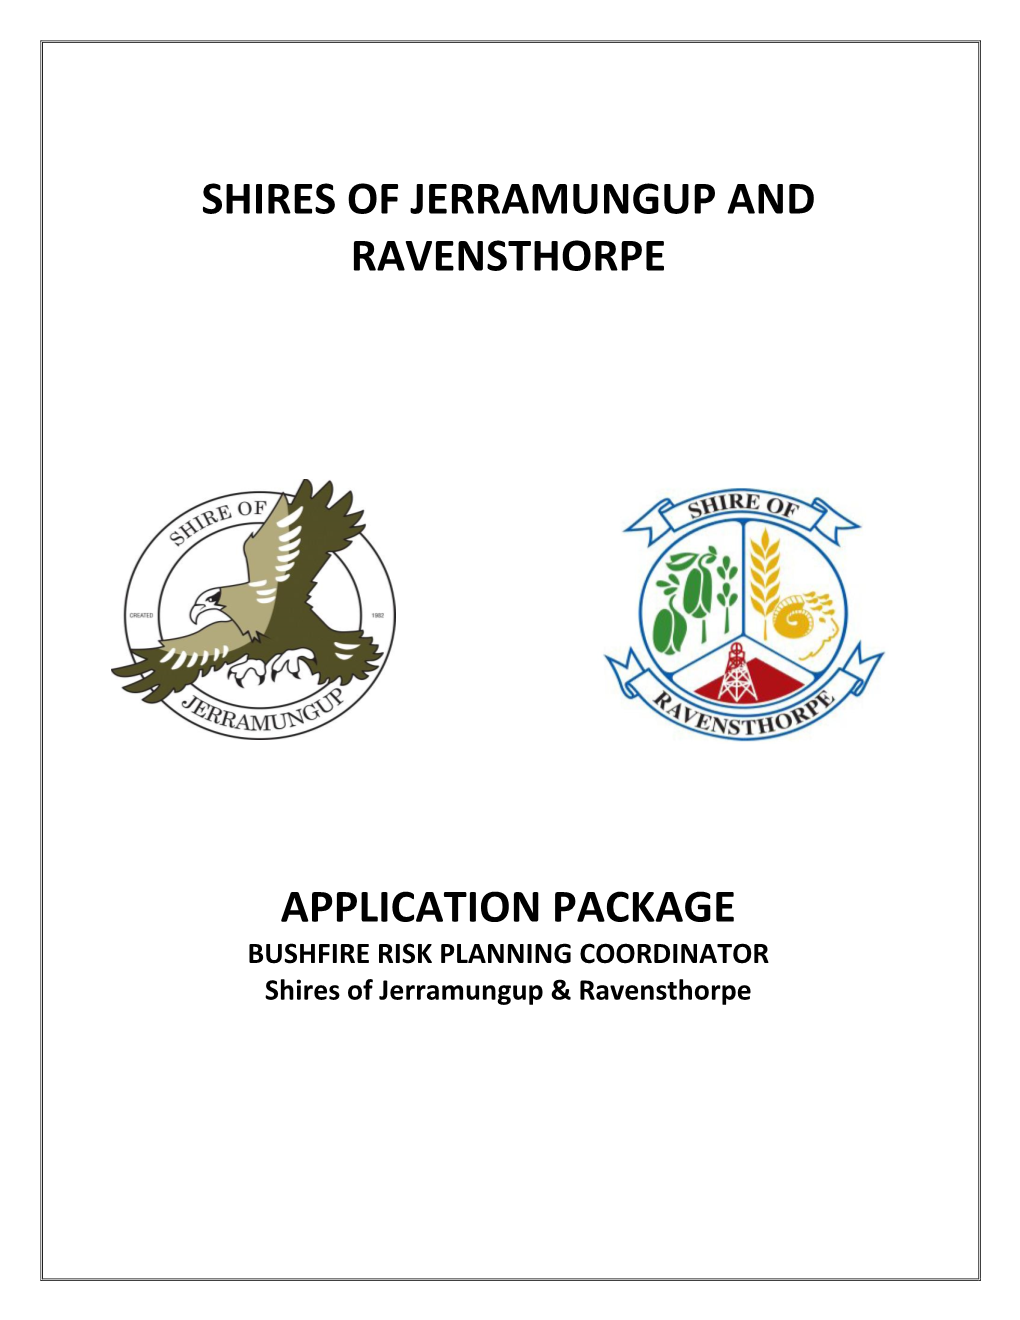 BUSHFIRE RISK PLANNING COORDINATOR Shires of Jerramungup & Ravensthorpe